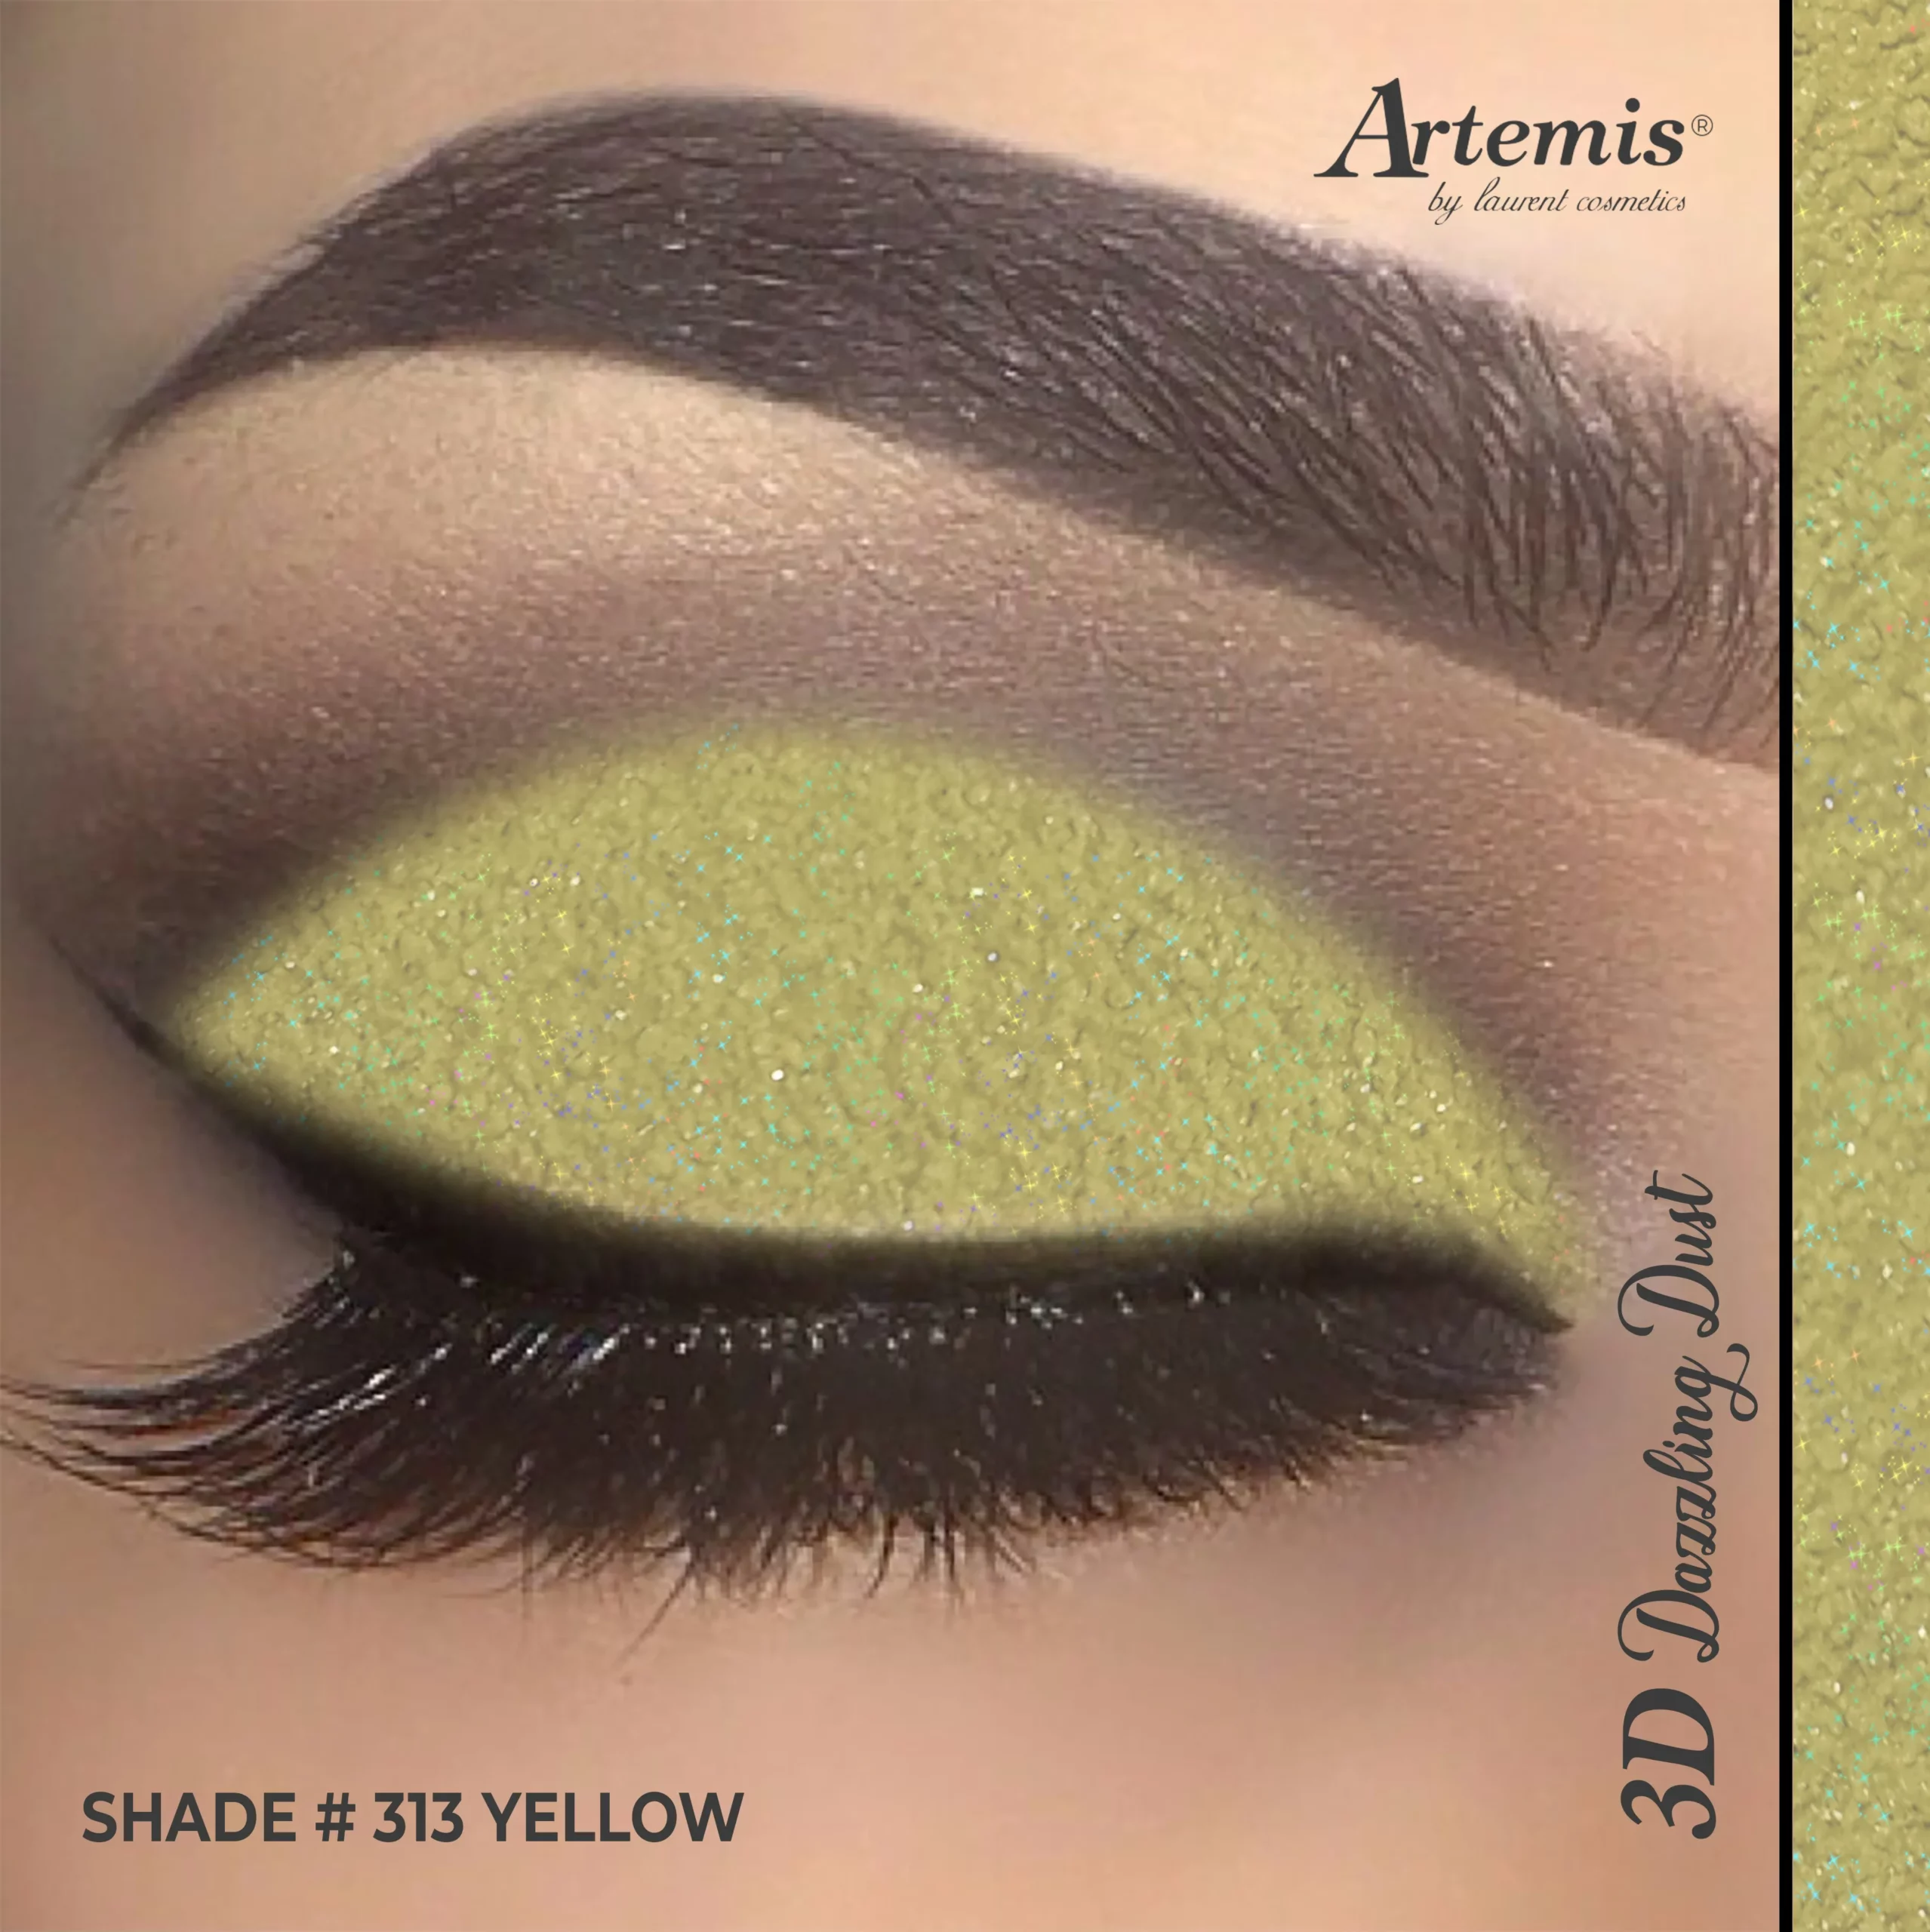 Artemis Dazzling Dust 313 Yellow